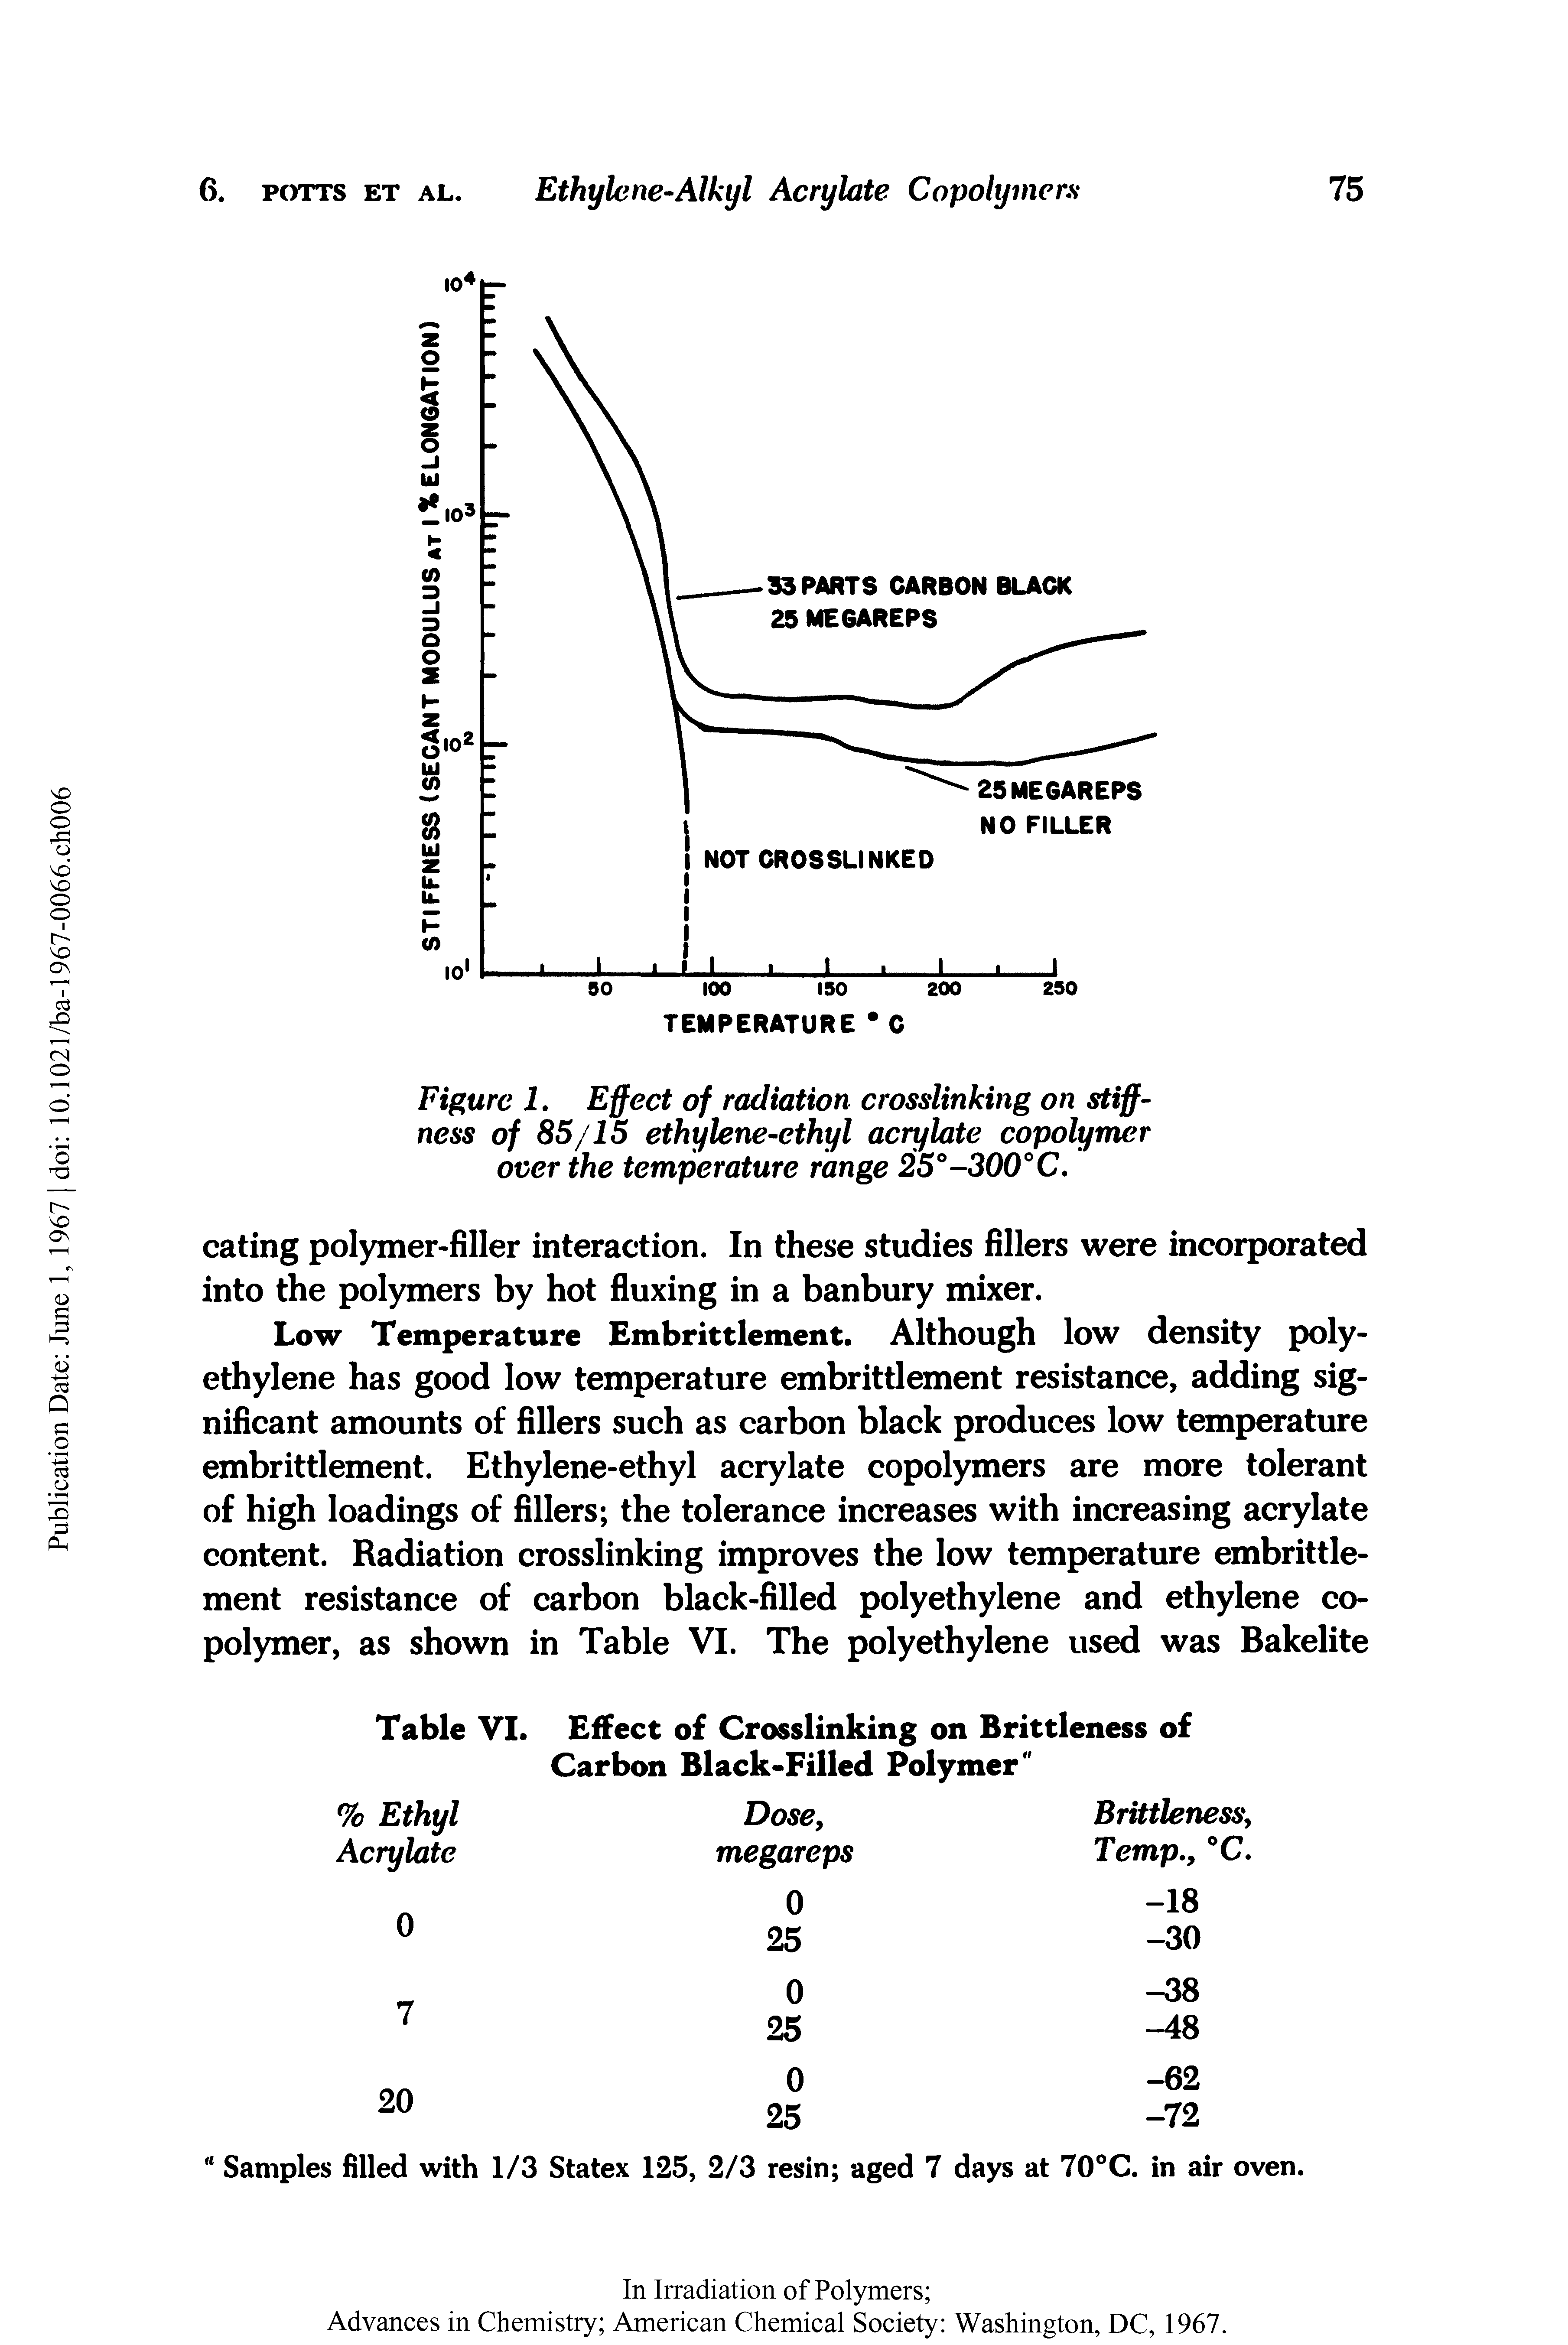 Figure I. Effect of radiation crosslinking on stiffness of 85/15 ethylene-ethyl acrylate copolymer over the temperature range 25°-300°C.